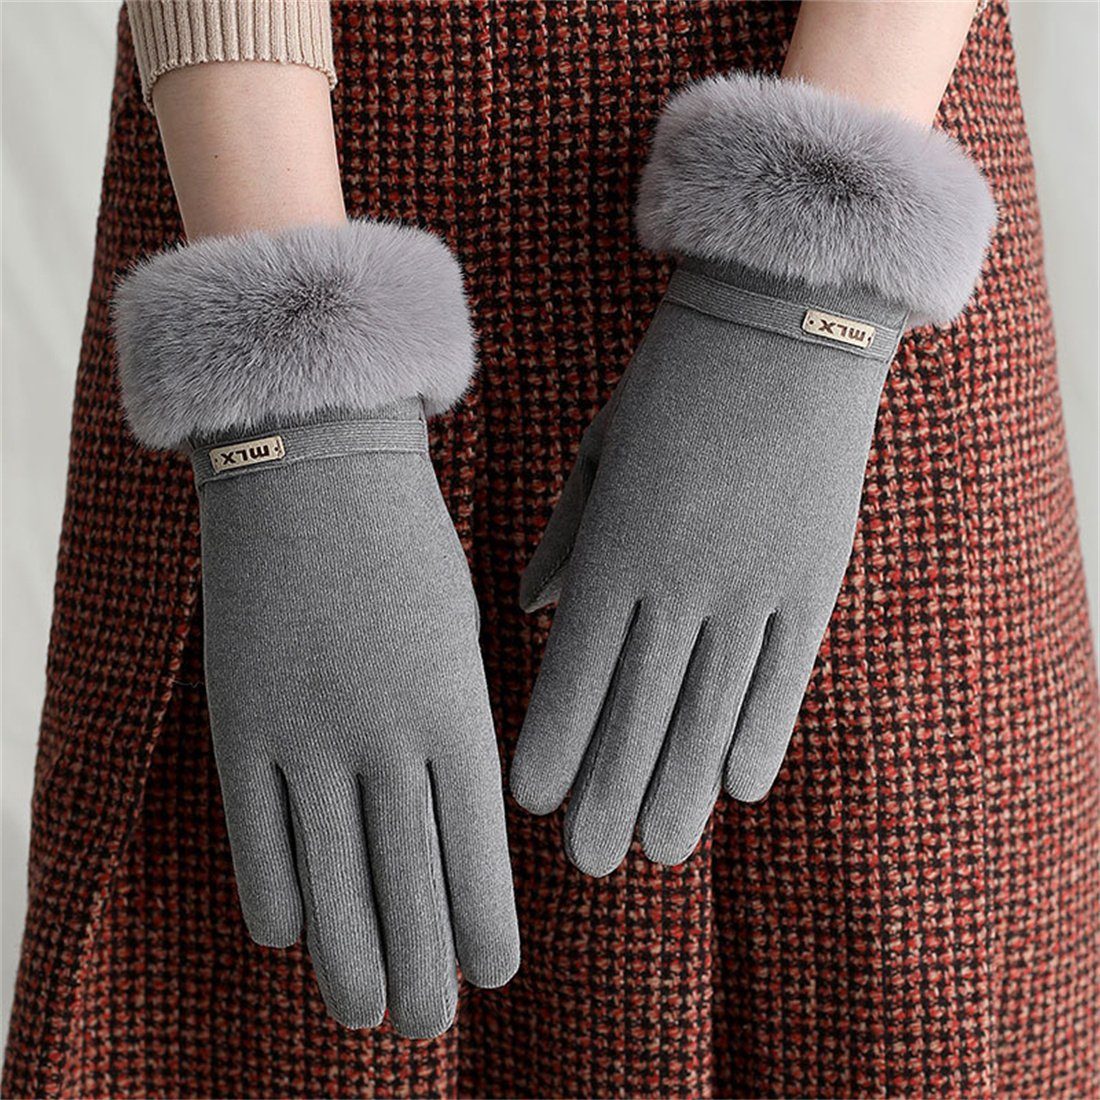 DÖRÖY Frauen, für Outdoor-Radhandschuhe warme Grau Winterhandschuhe Fleecehandschuhe gepolsterte